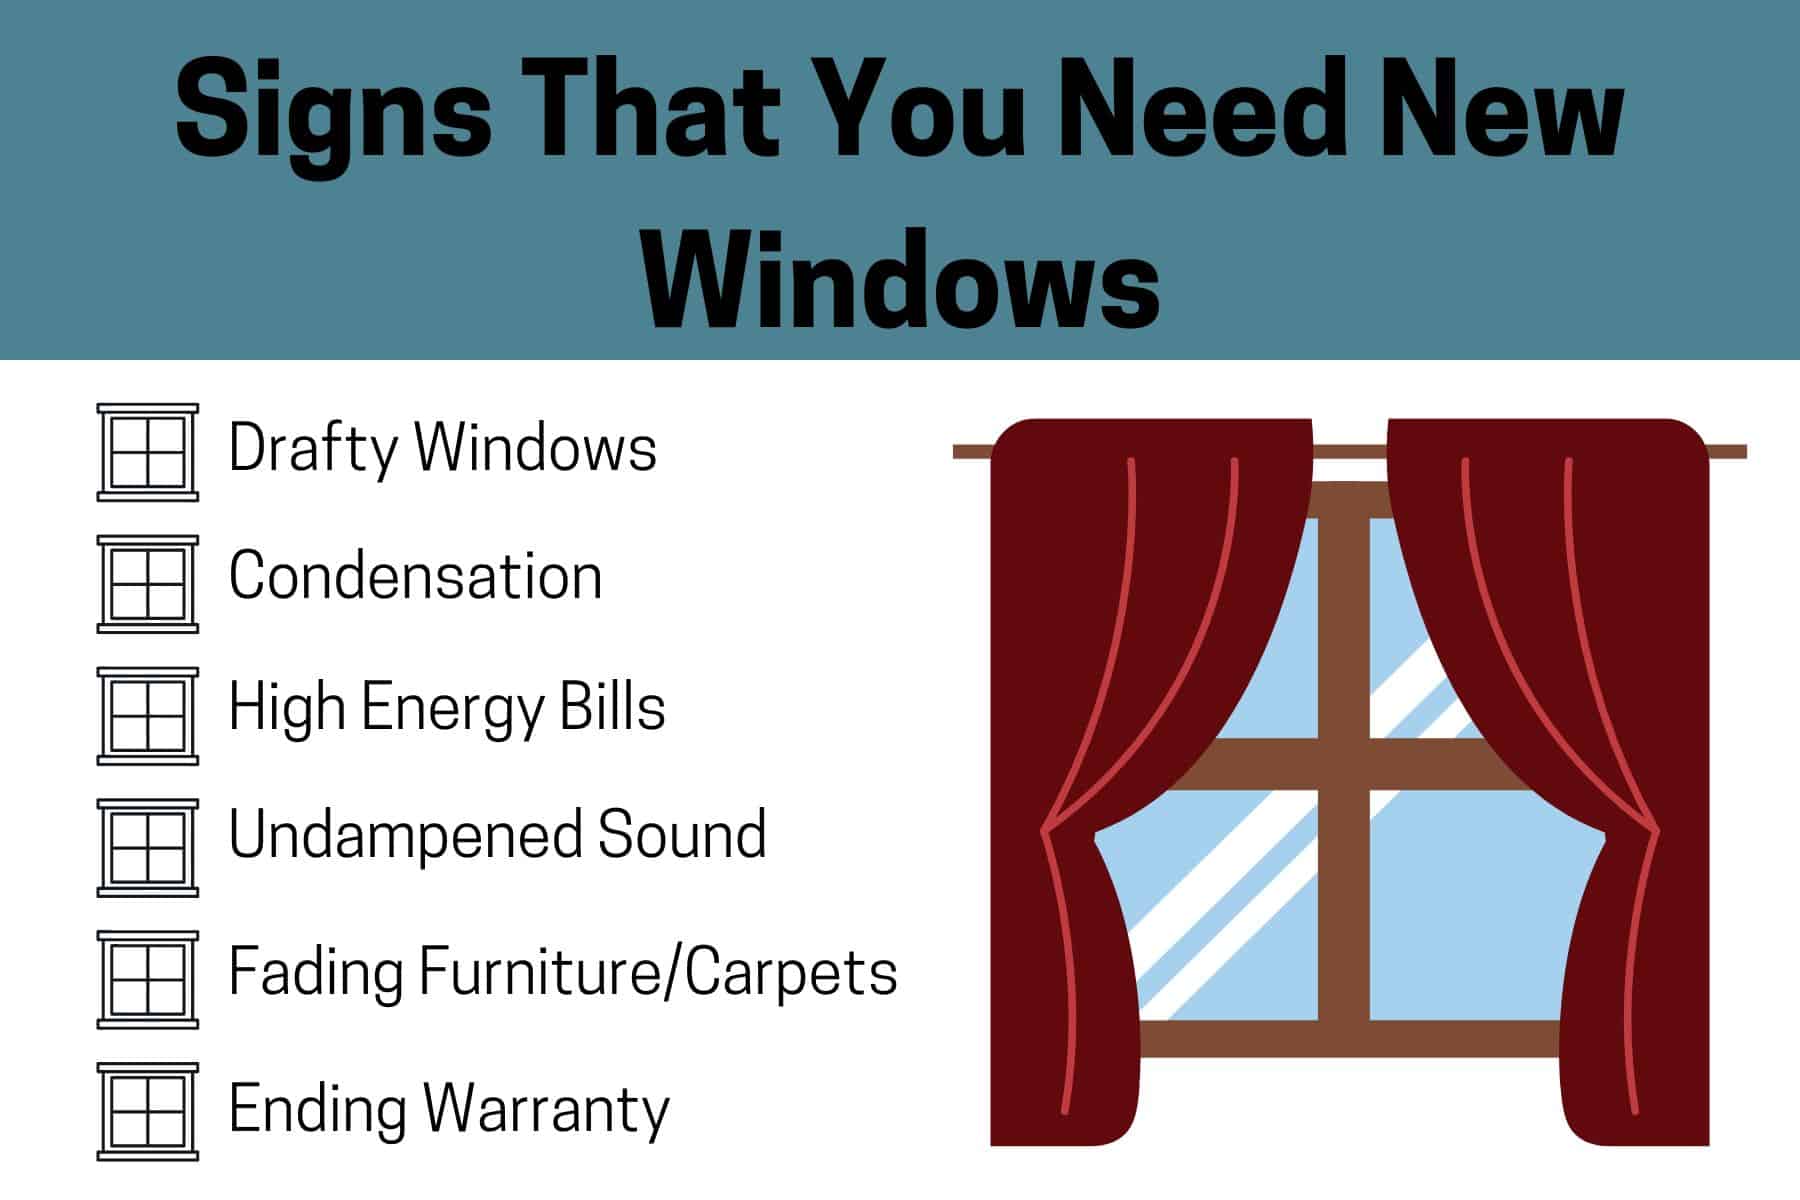 Signs you need new windowsv